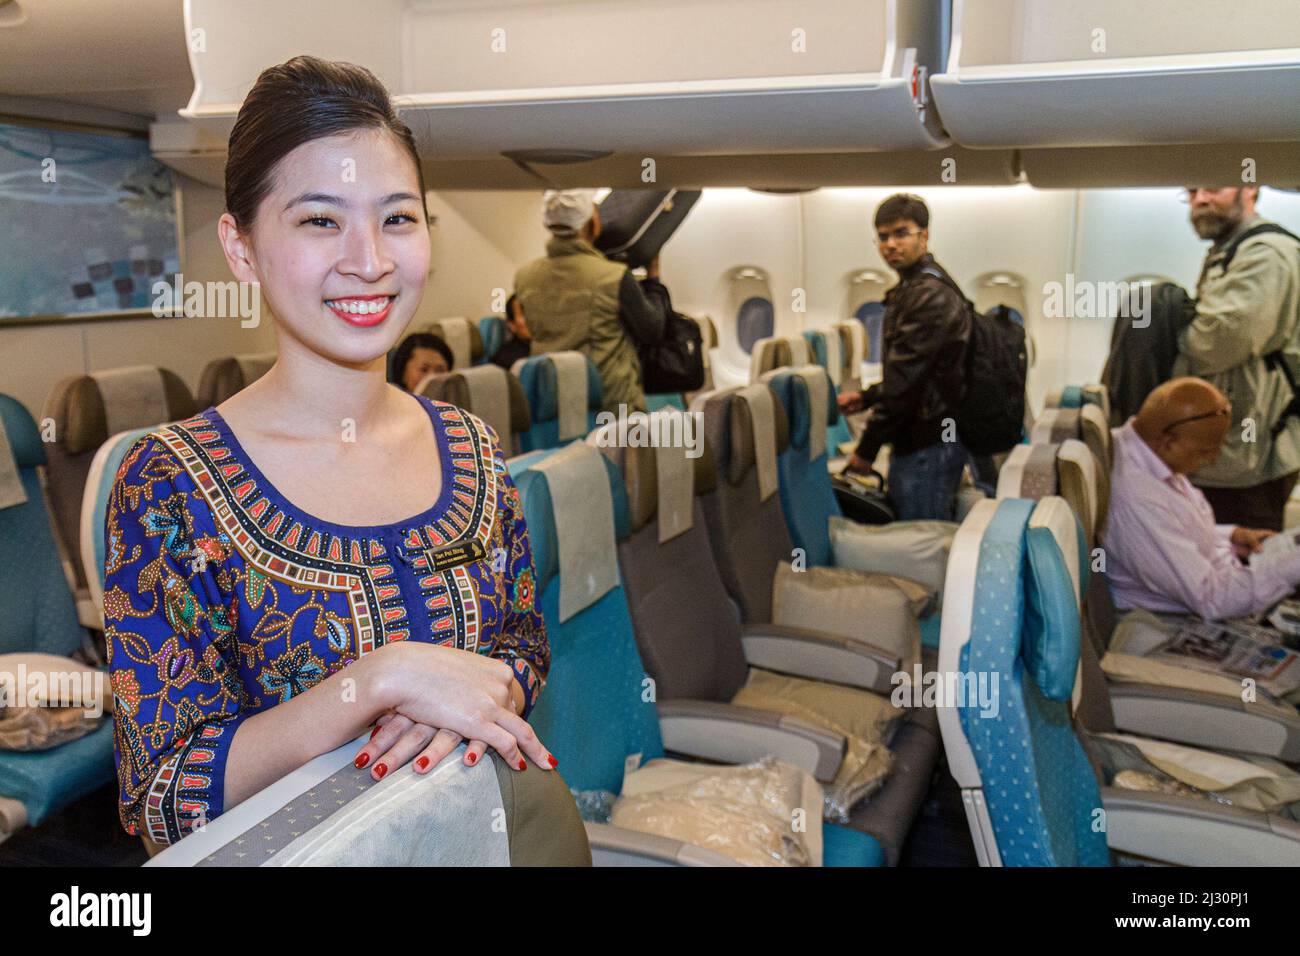 San Francisco California,International Airport,Singapore Airlines,passenger cabin,Asian woman female attendant boarding passengers economy class seats Stock Photo